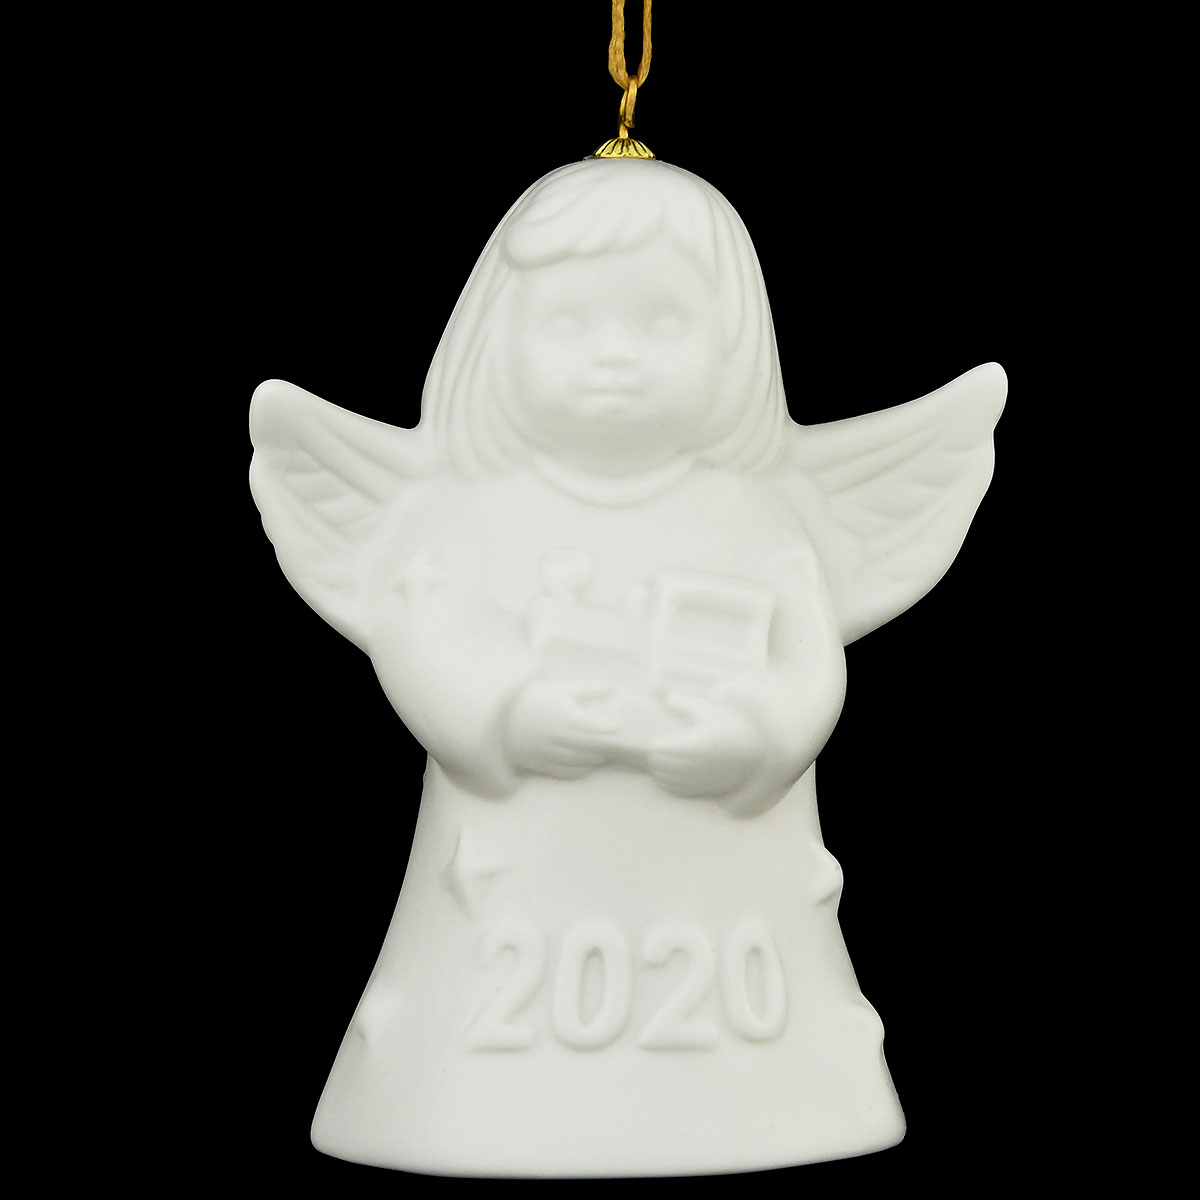 2020 White Angel Bell Ornament